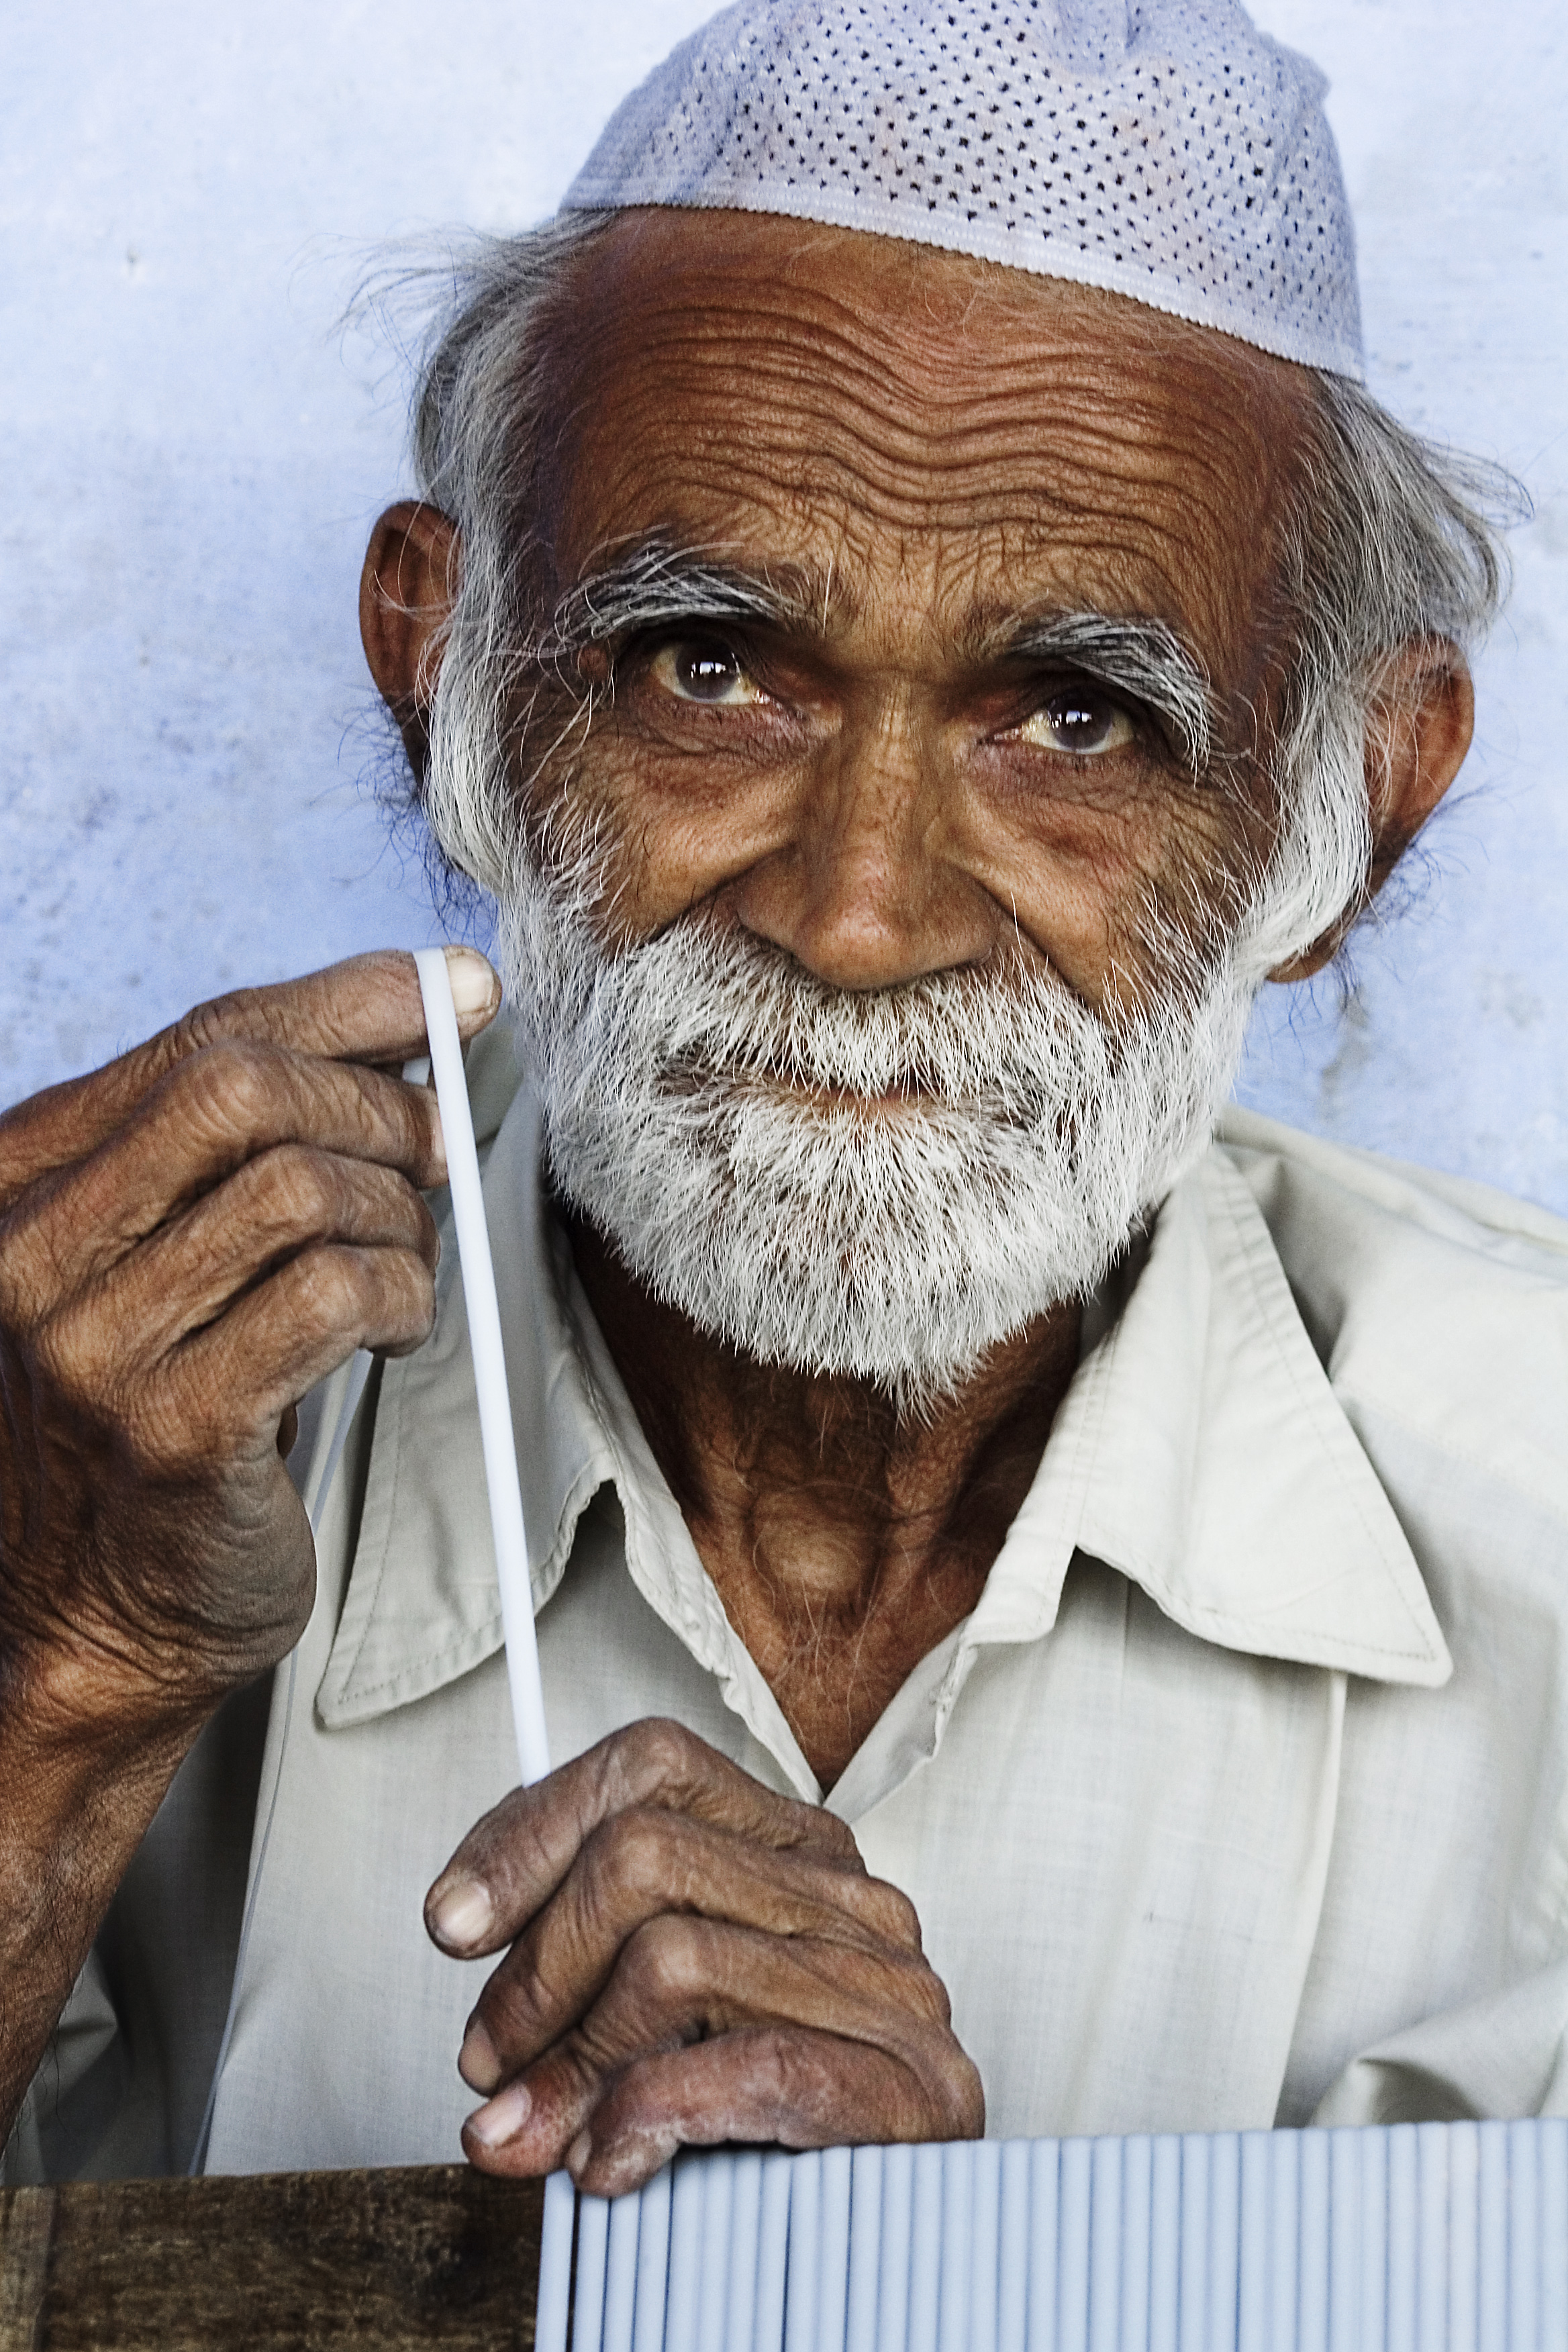 File:India - Delhi old man - 5089.jpg - Wikimedia Commons